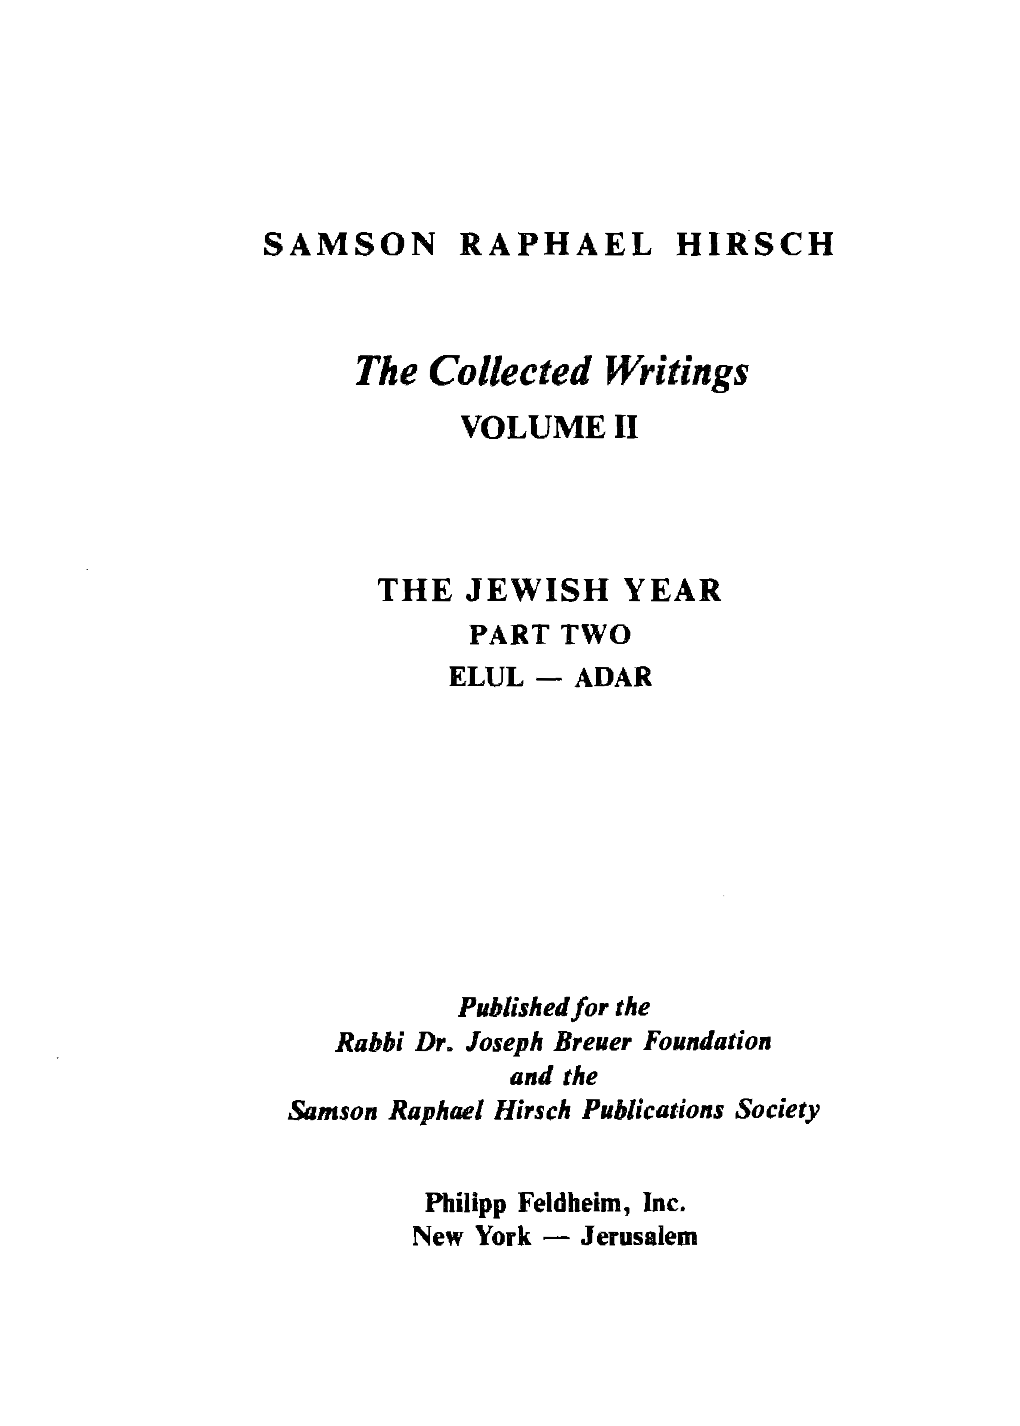 The Jewish Year Part Two Elul - Adar